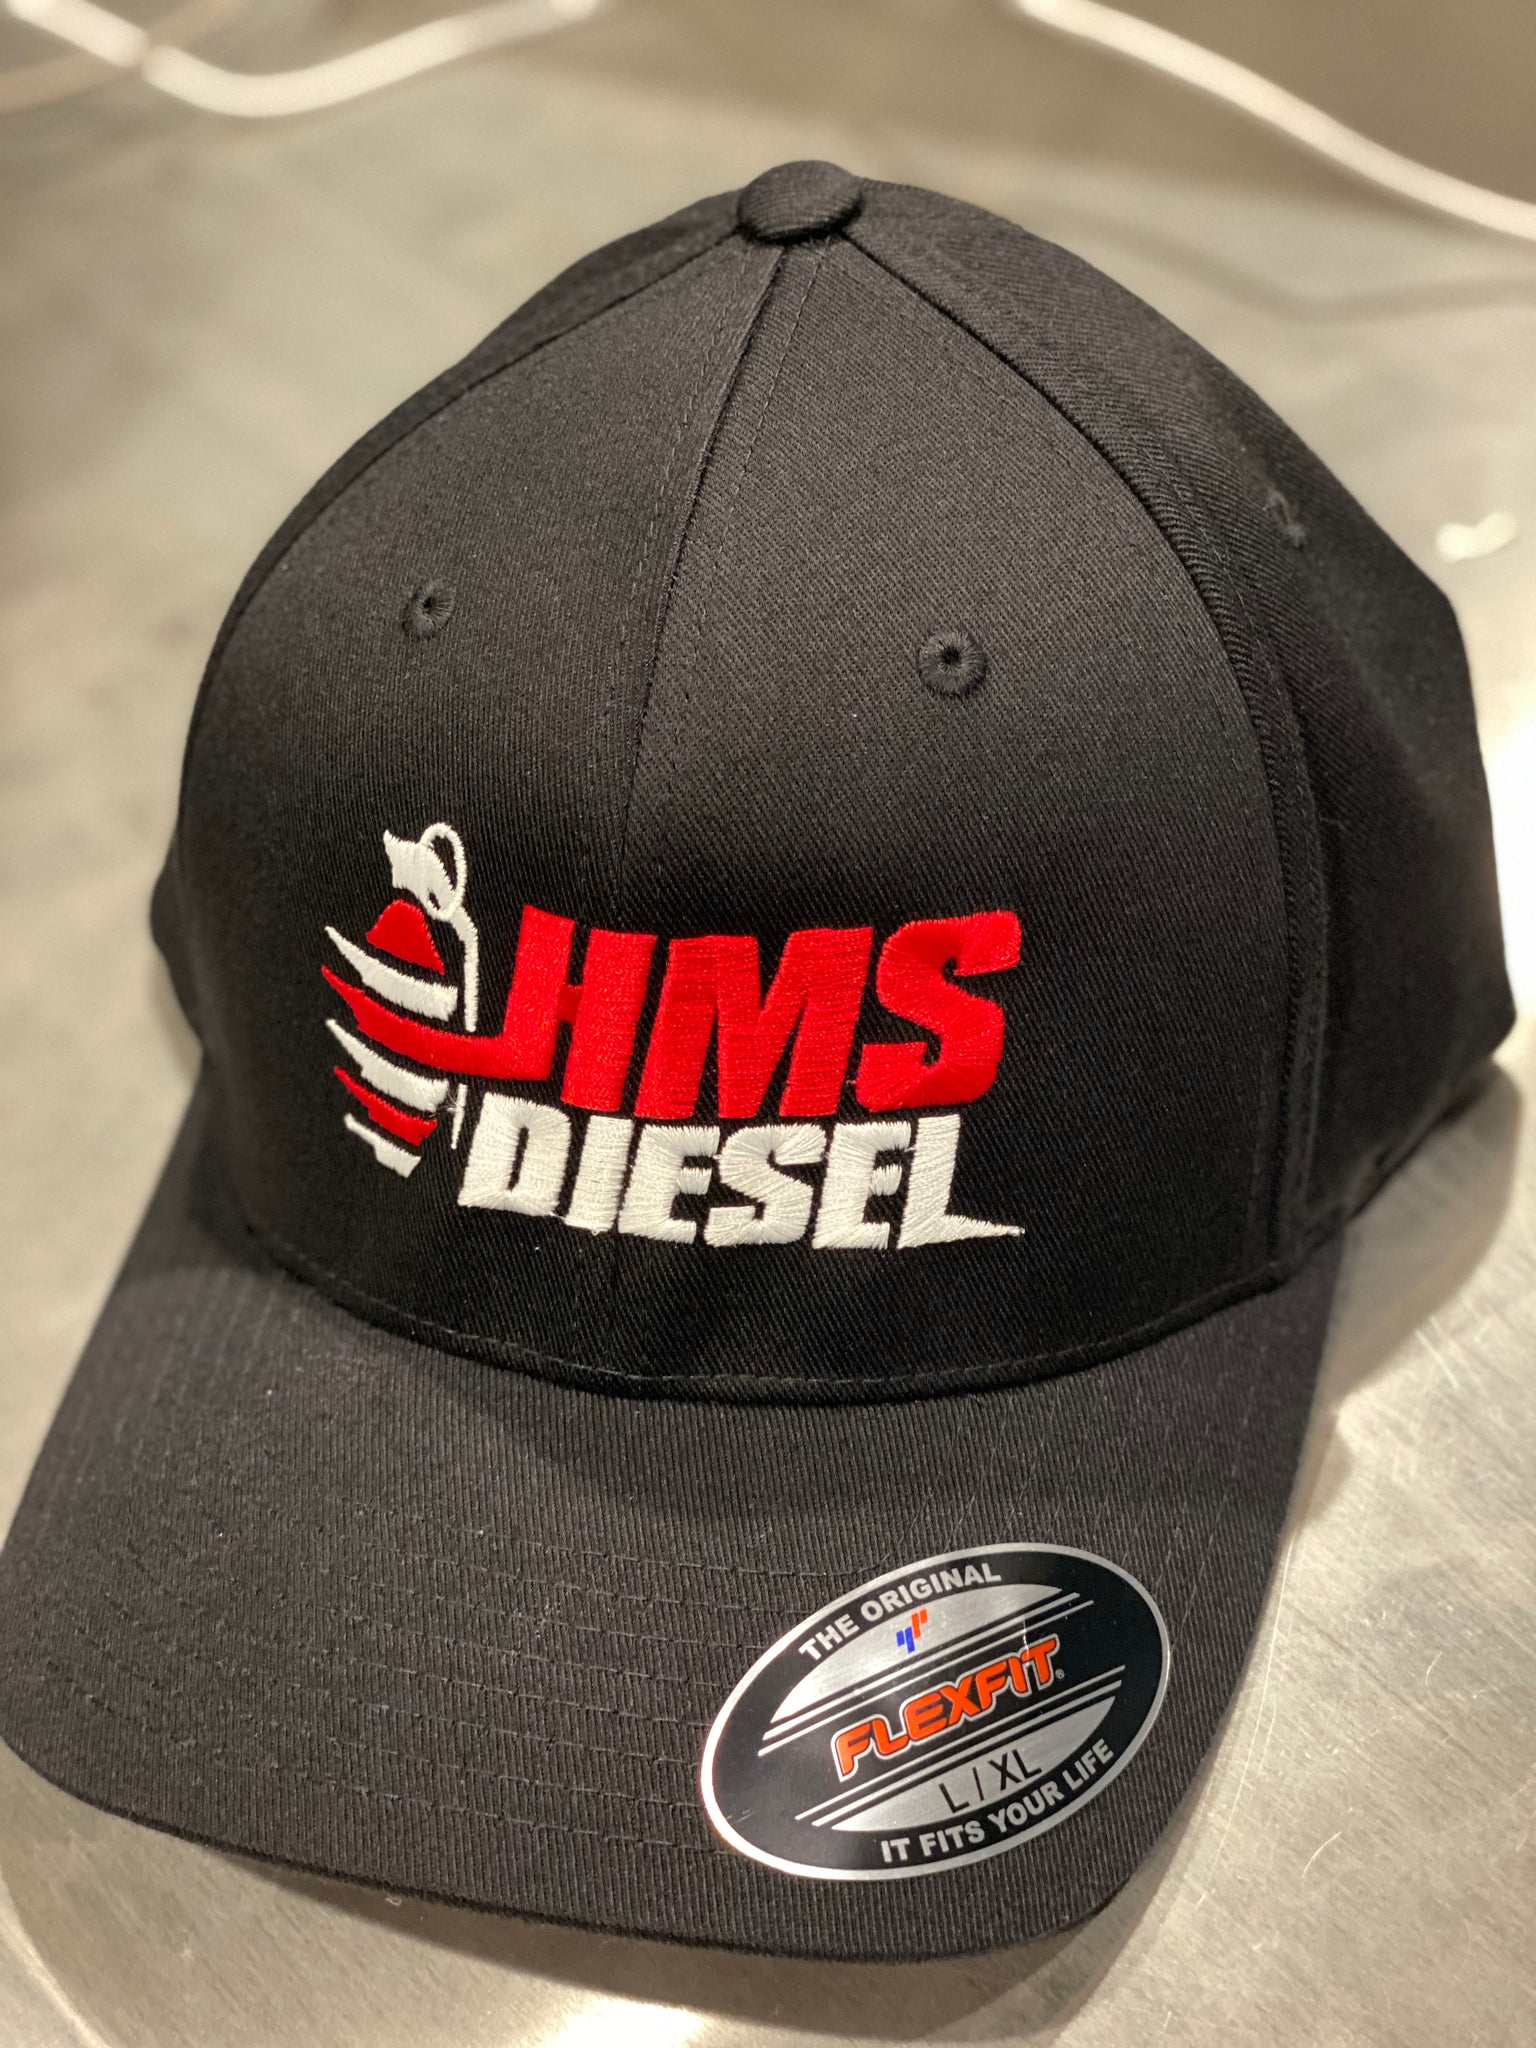 HMS Diesel flex fit hat